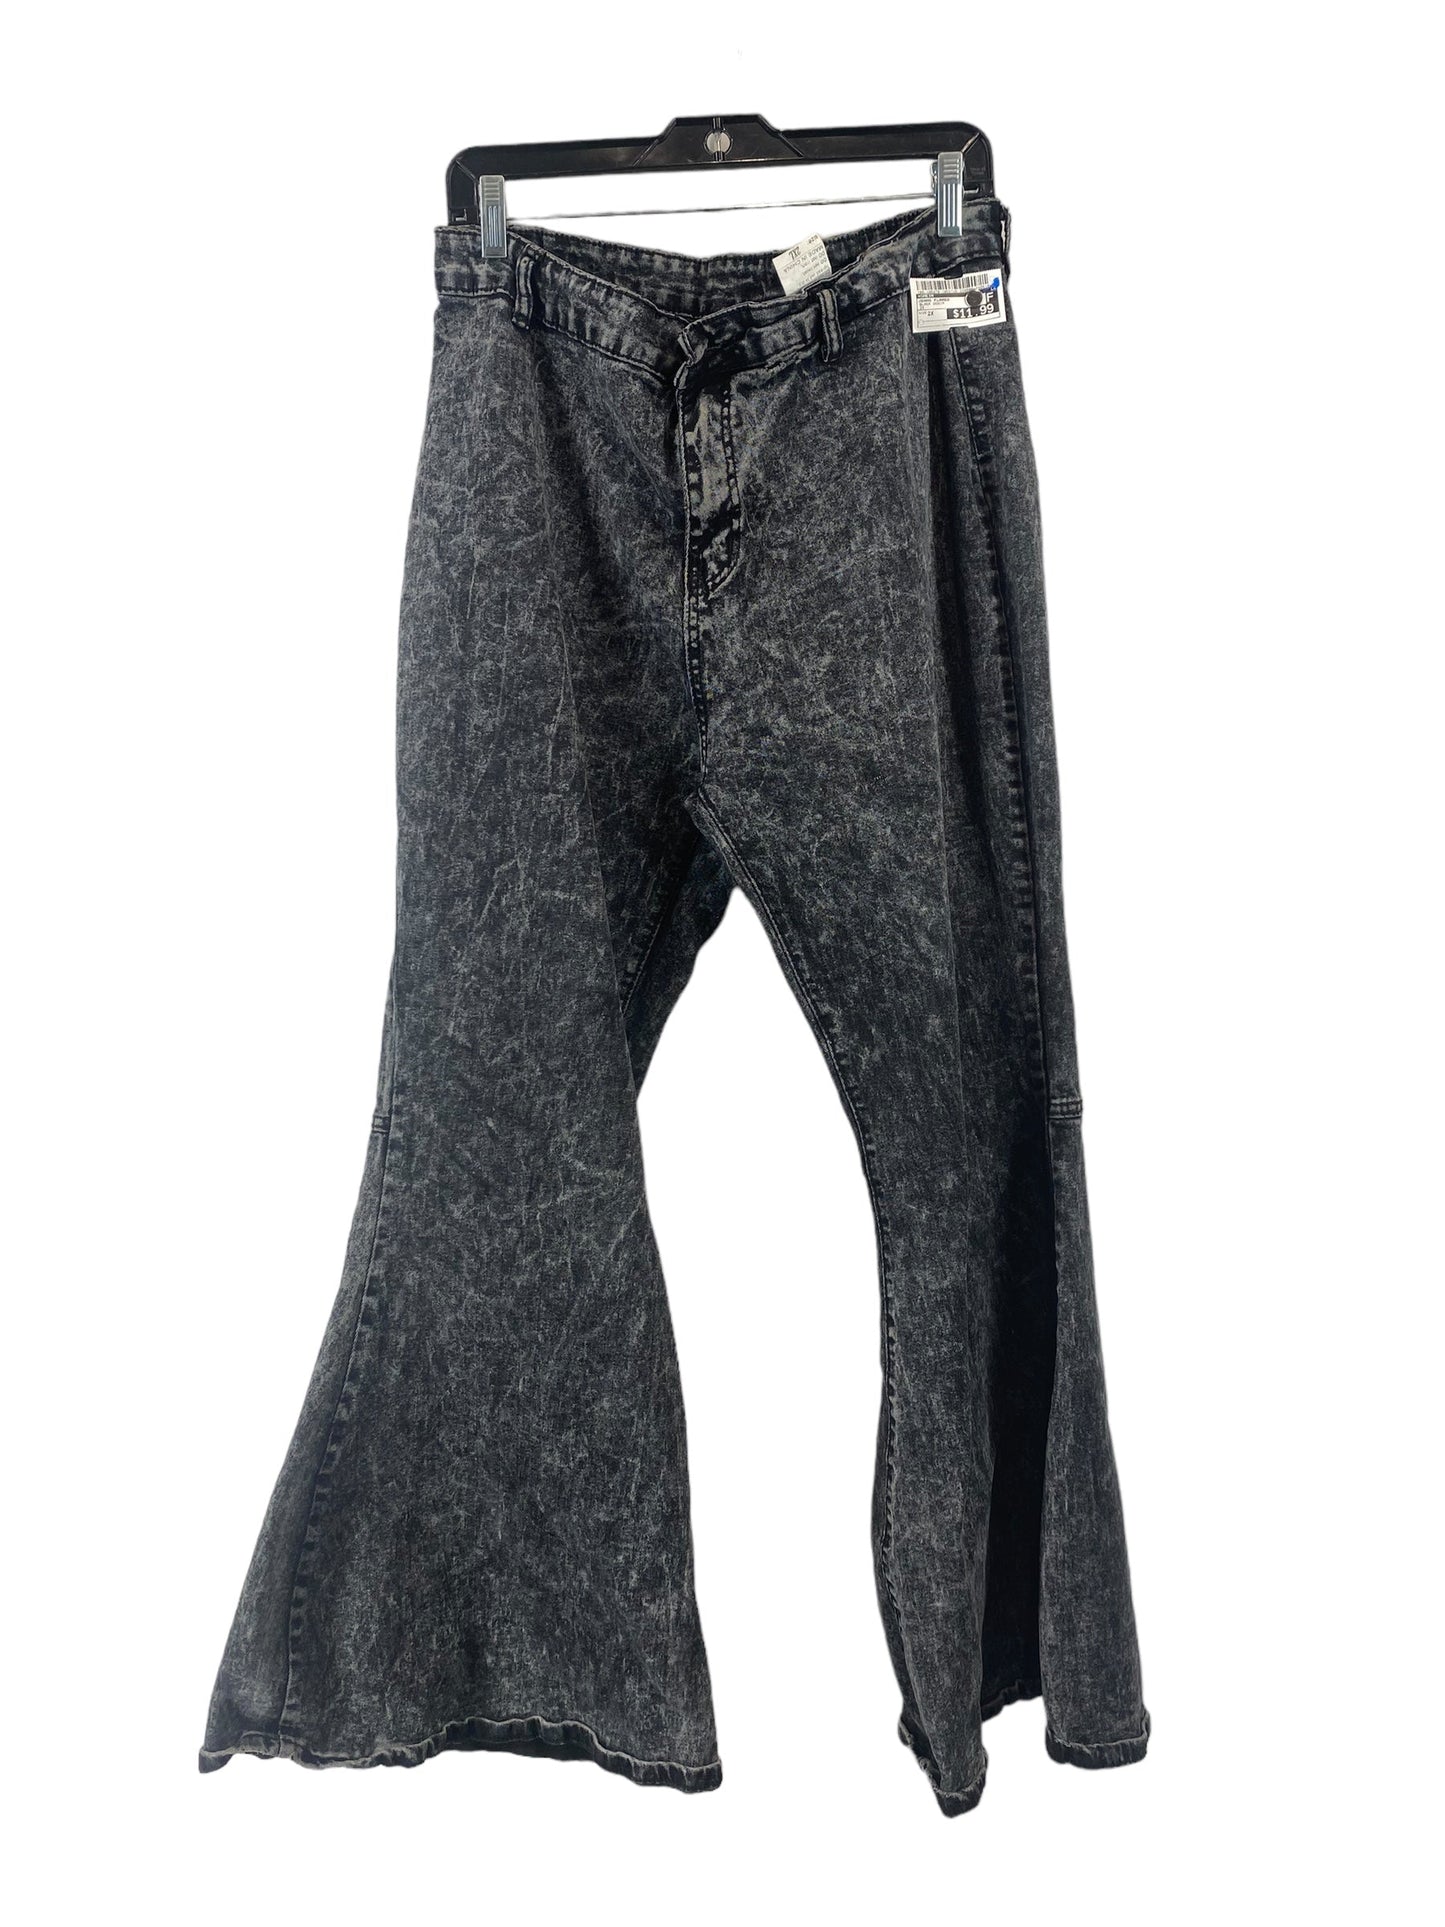 Black Denim Jeans Flared Shein, Size 2x